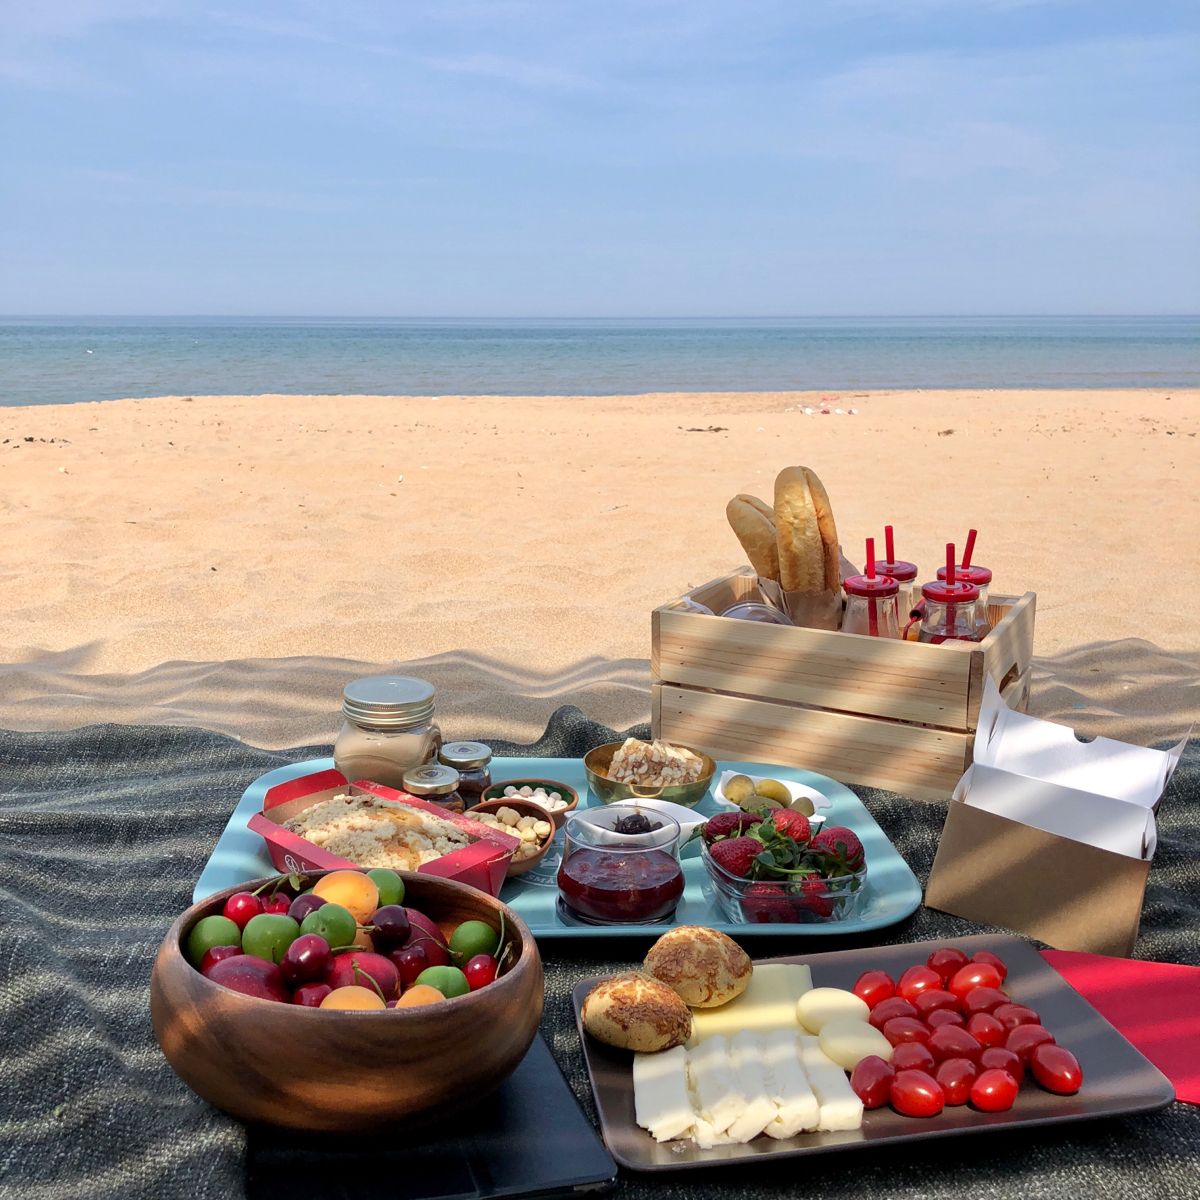 Beach Picnic Date Food Ideas